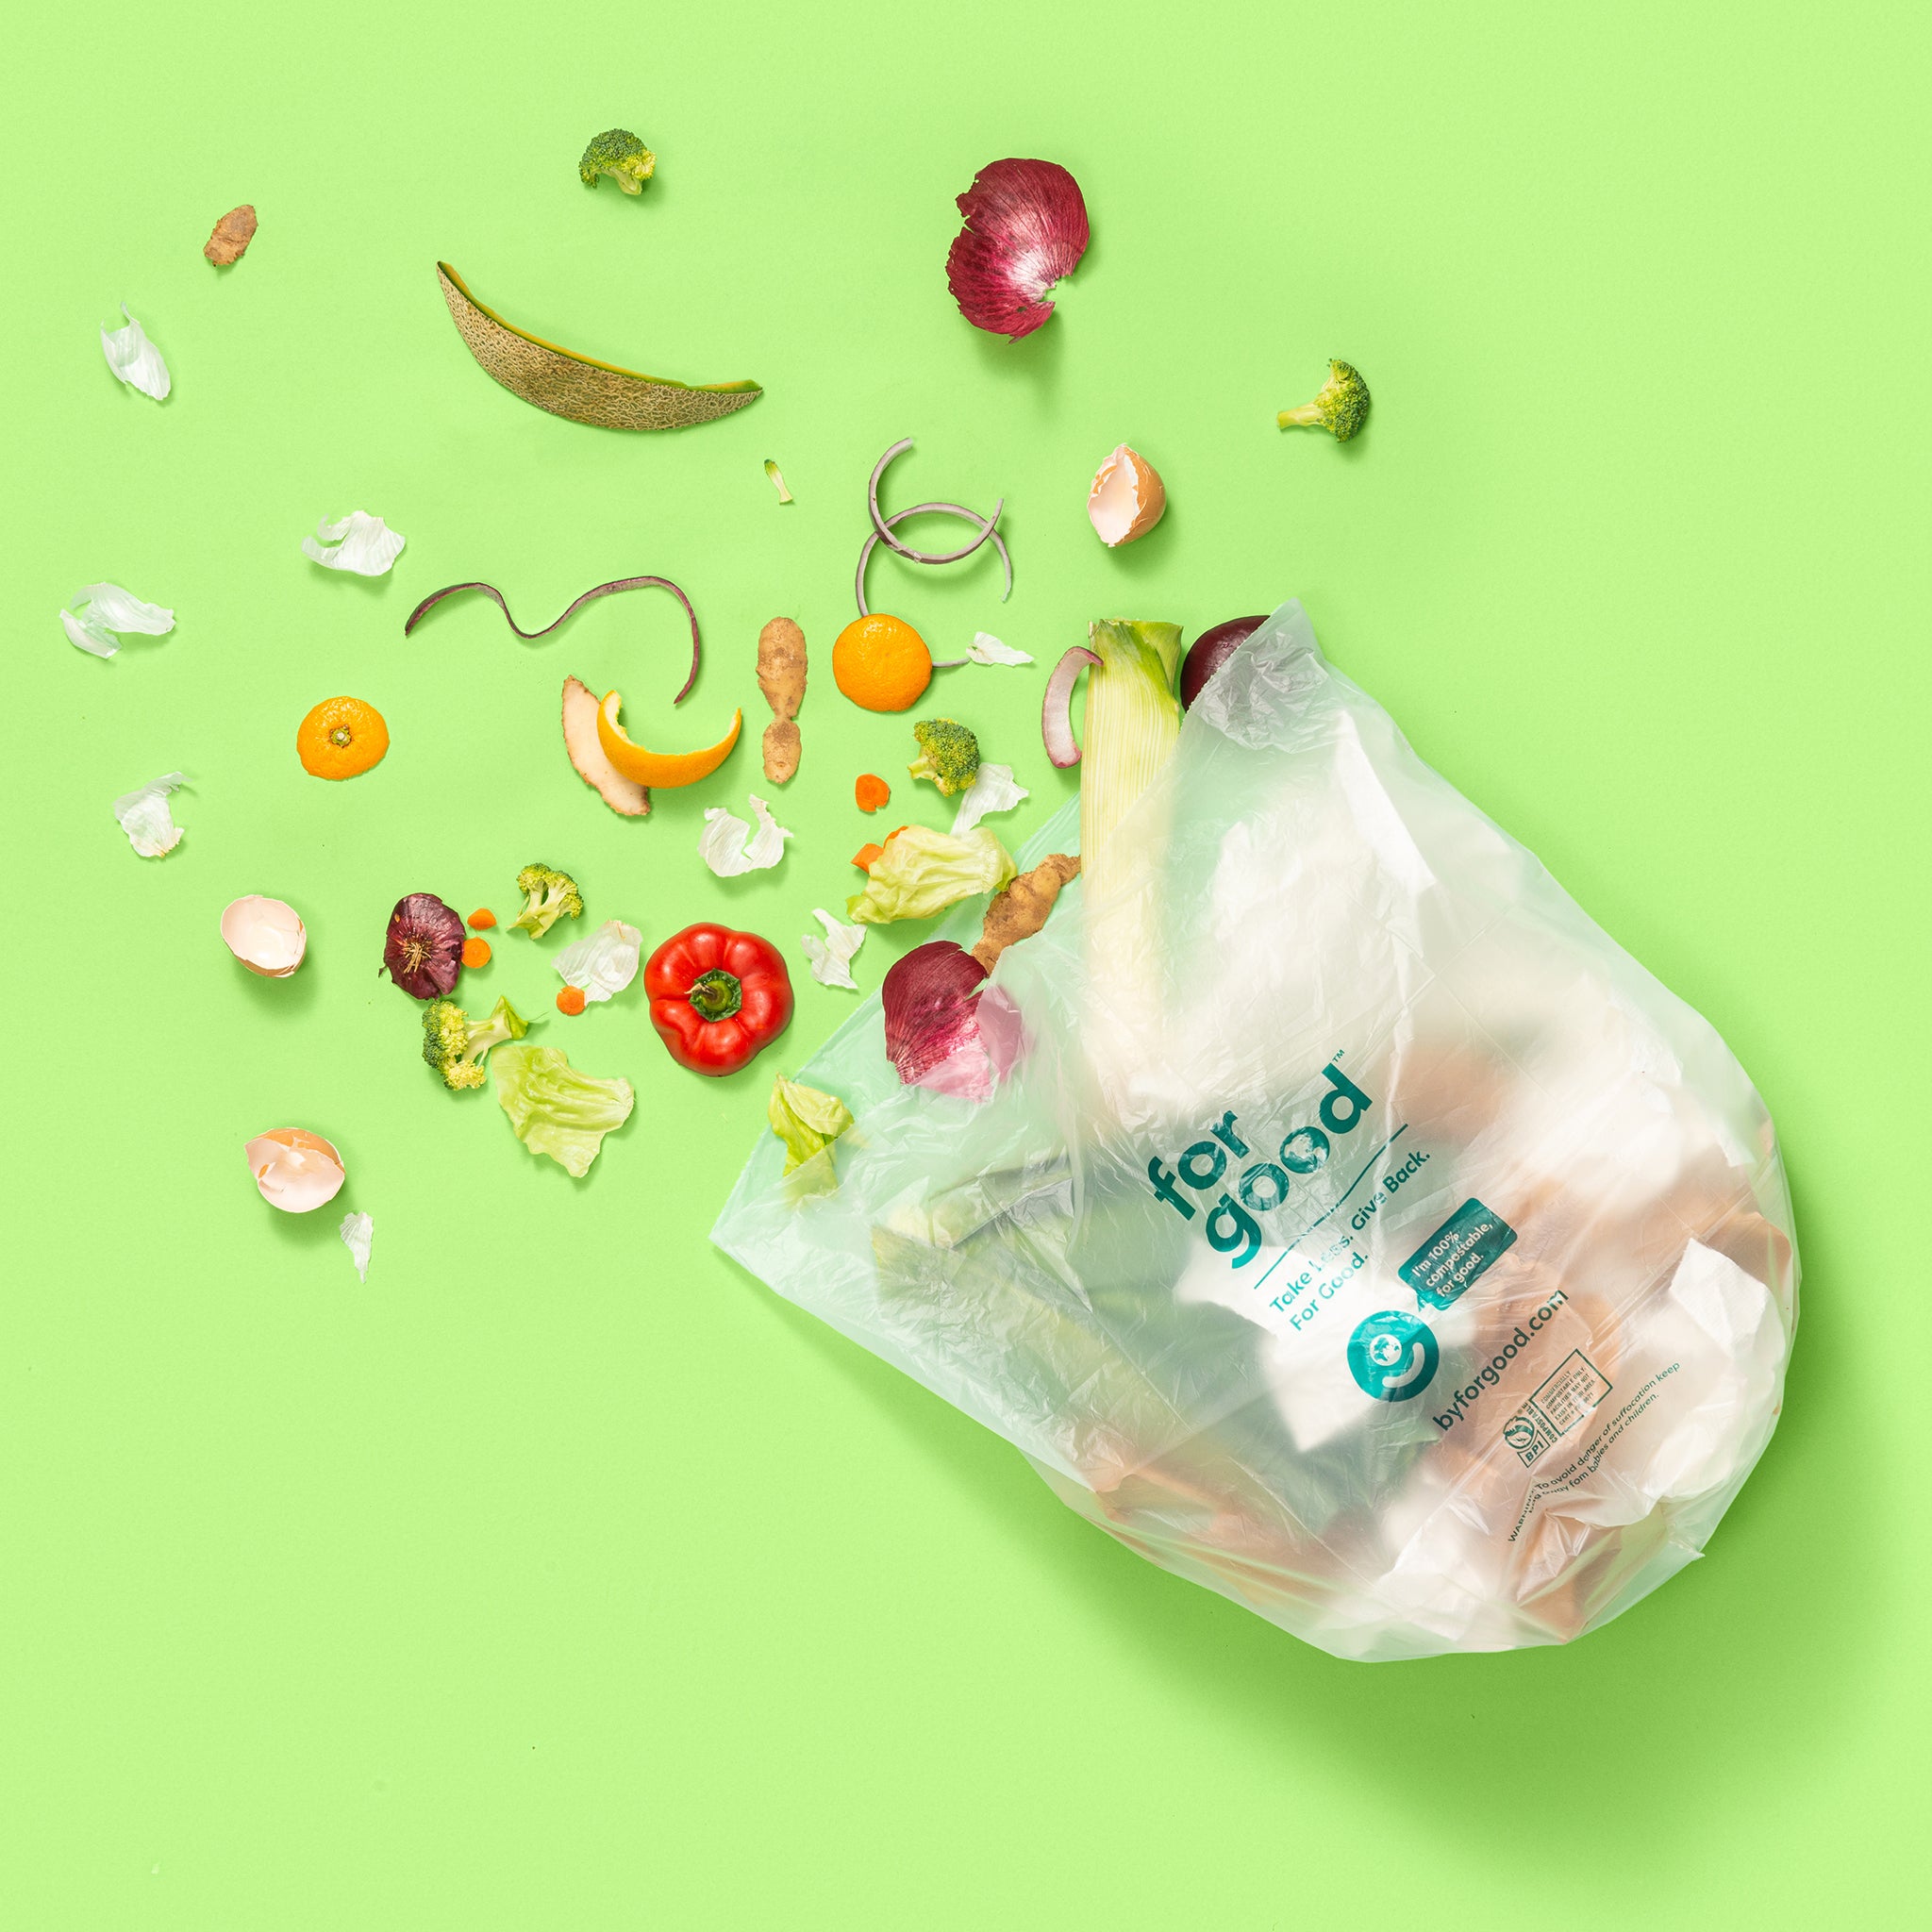 Trash Bags (3 Gallon) – Purplecart